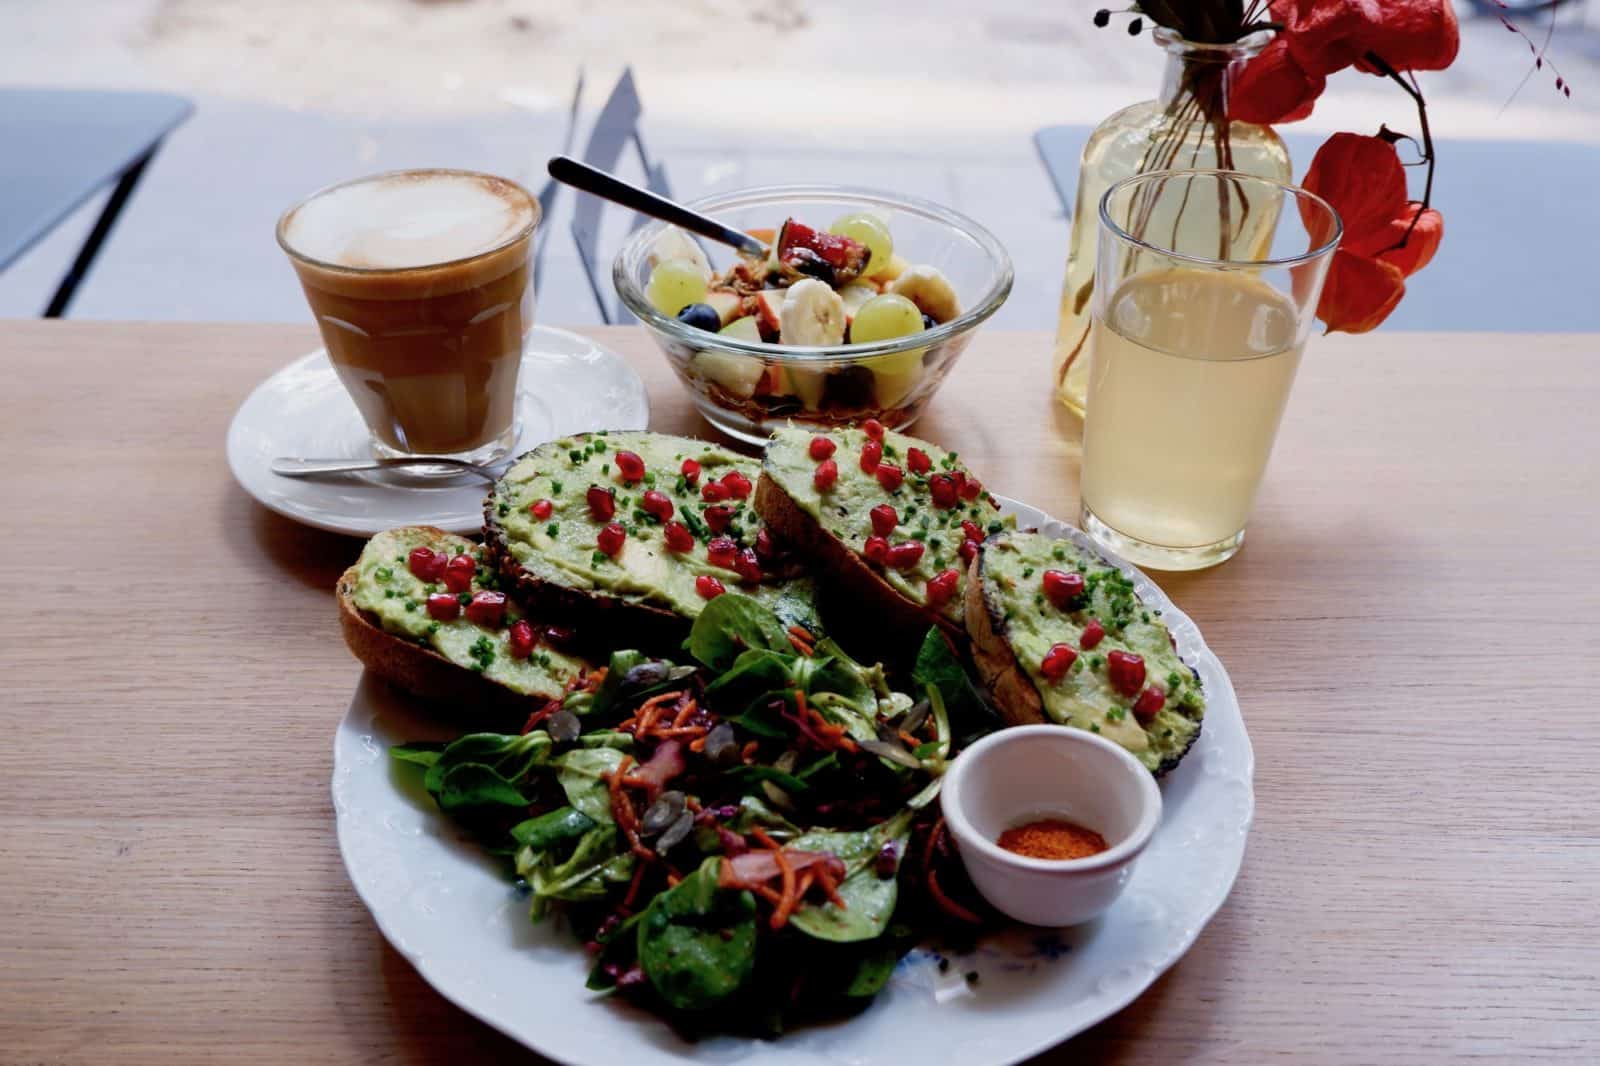 Creamy coffee, fresh fruit salad and avocado toast brunch at Mignon coffee shop in Paris 